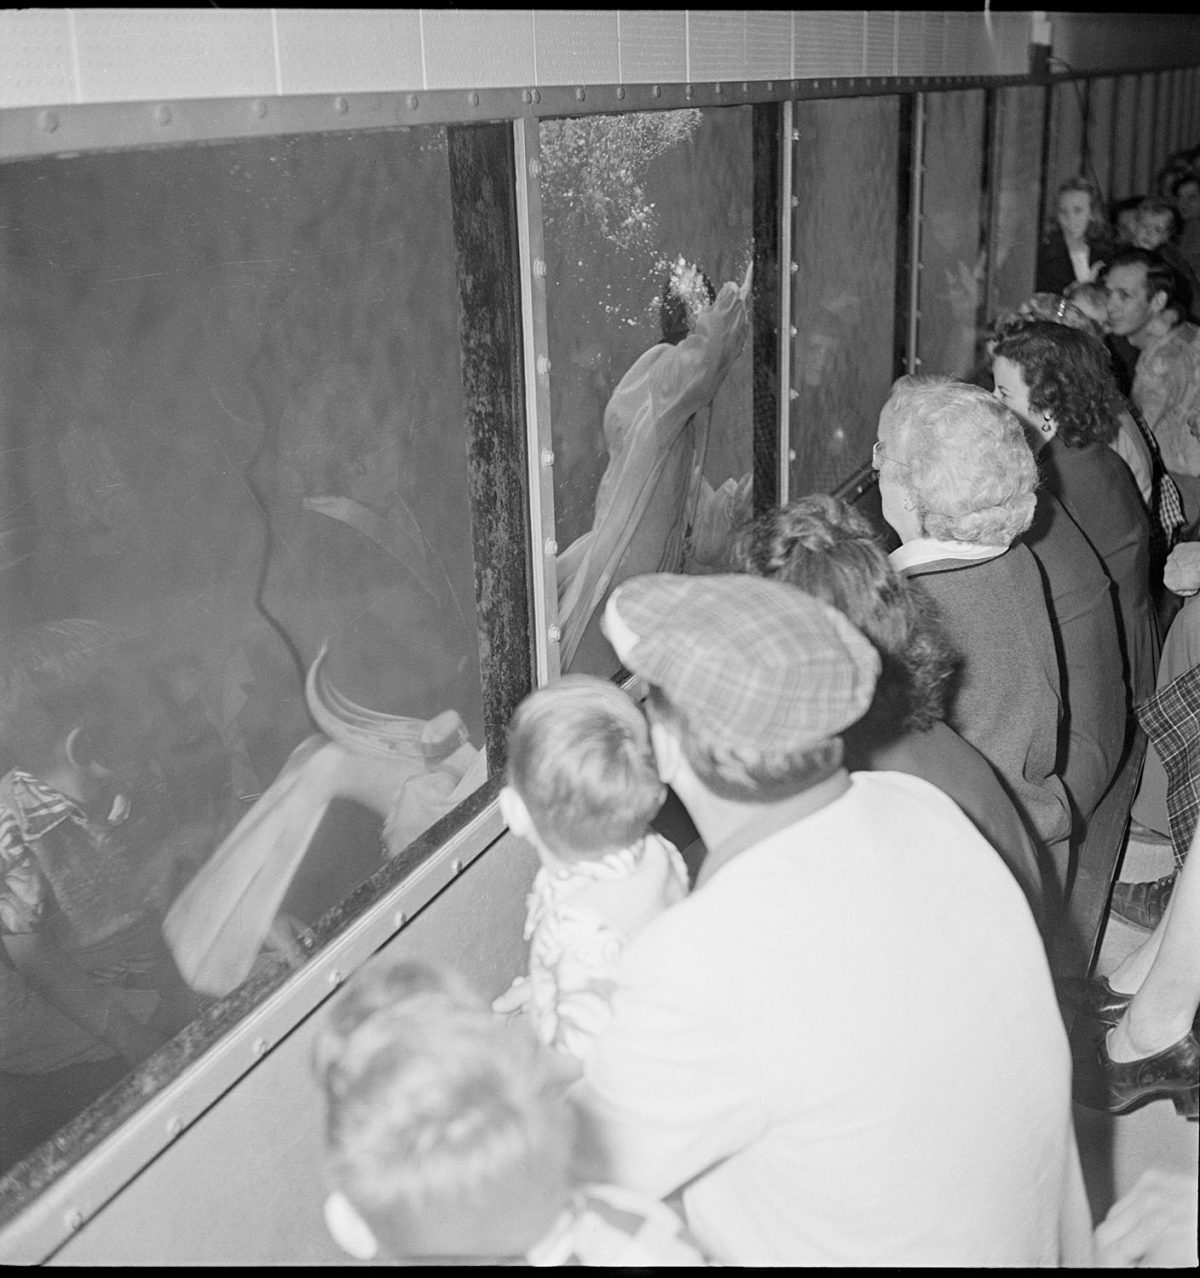 Glurpo performing in the submarine theater